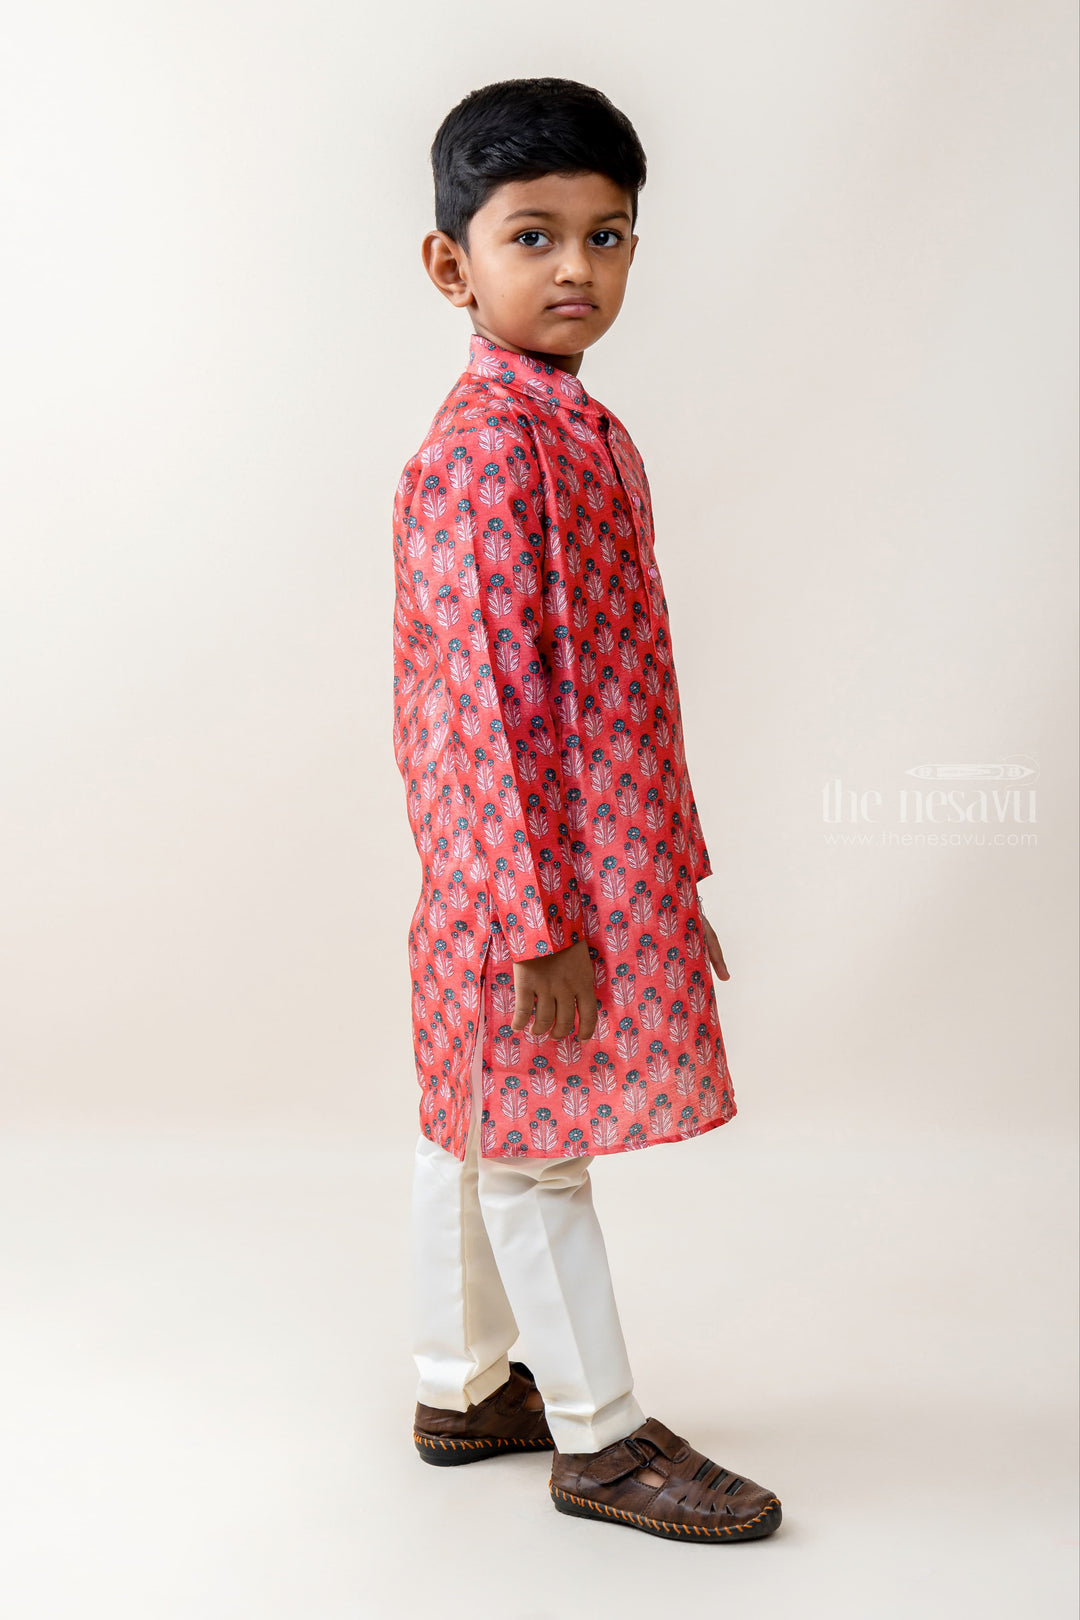 The Nesavu Ethnic Sets Flower And Leaf - Blended Cotton Red Shirt And Cotton Pant For Little Boys psr silks Nesavu